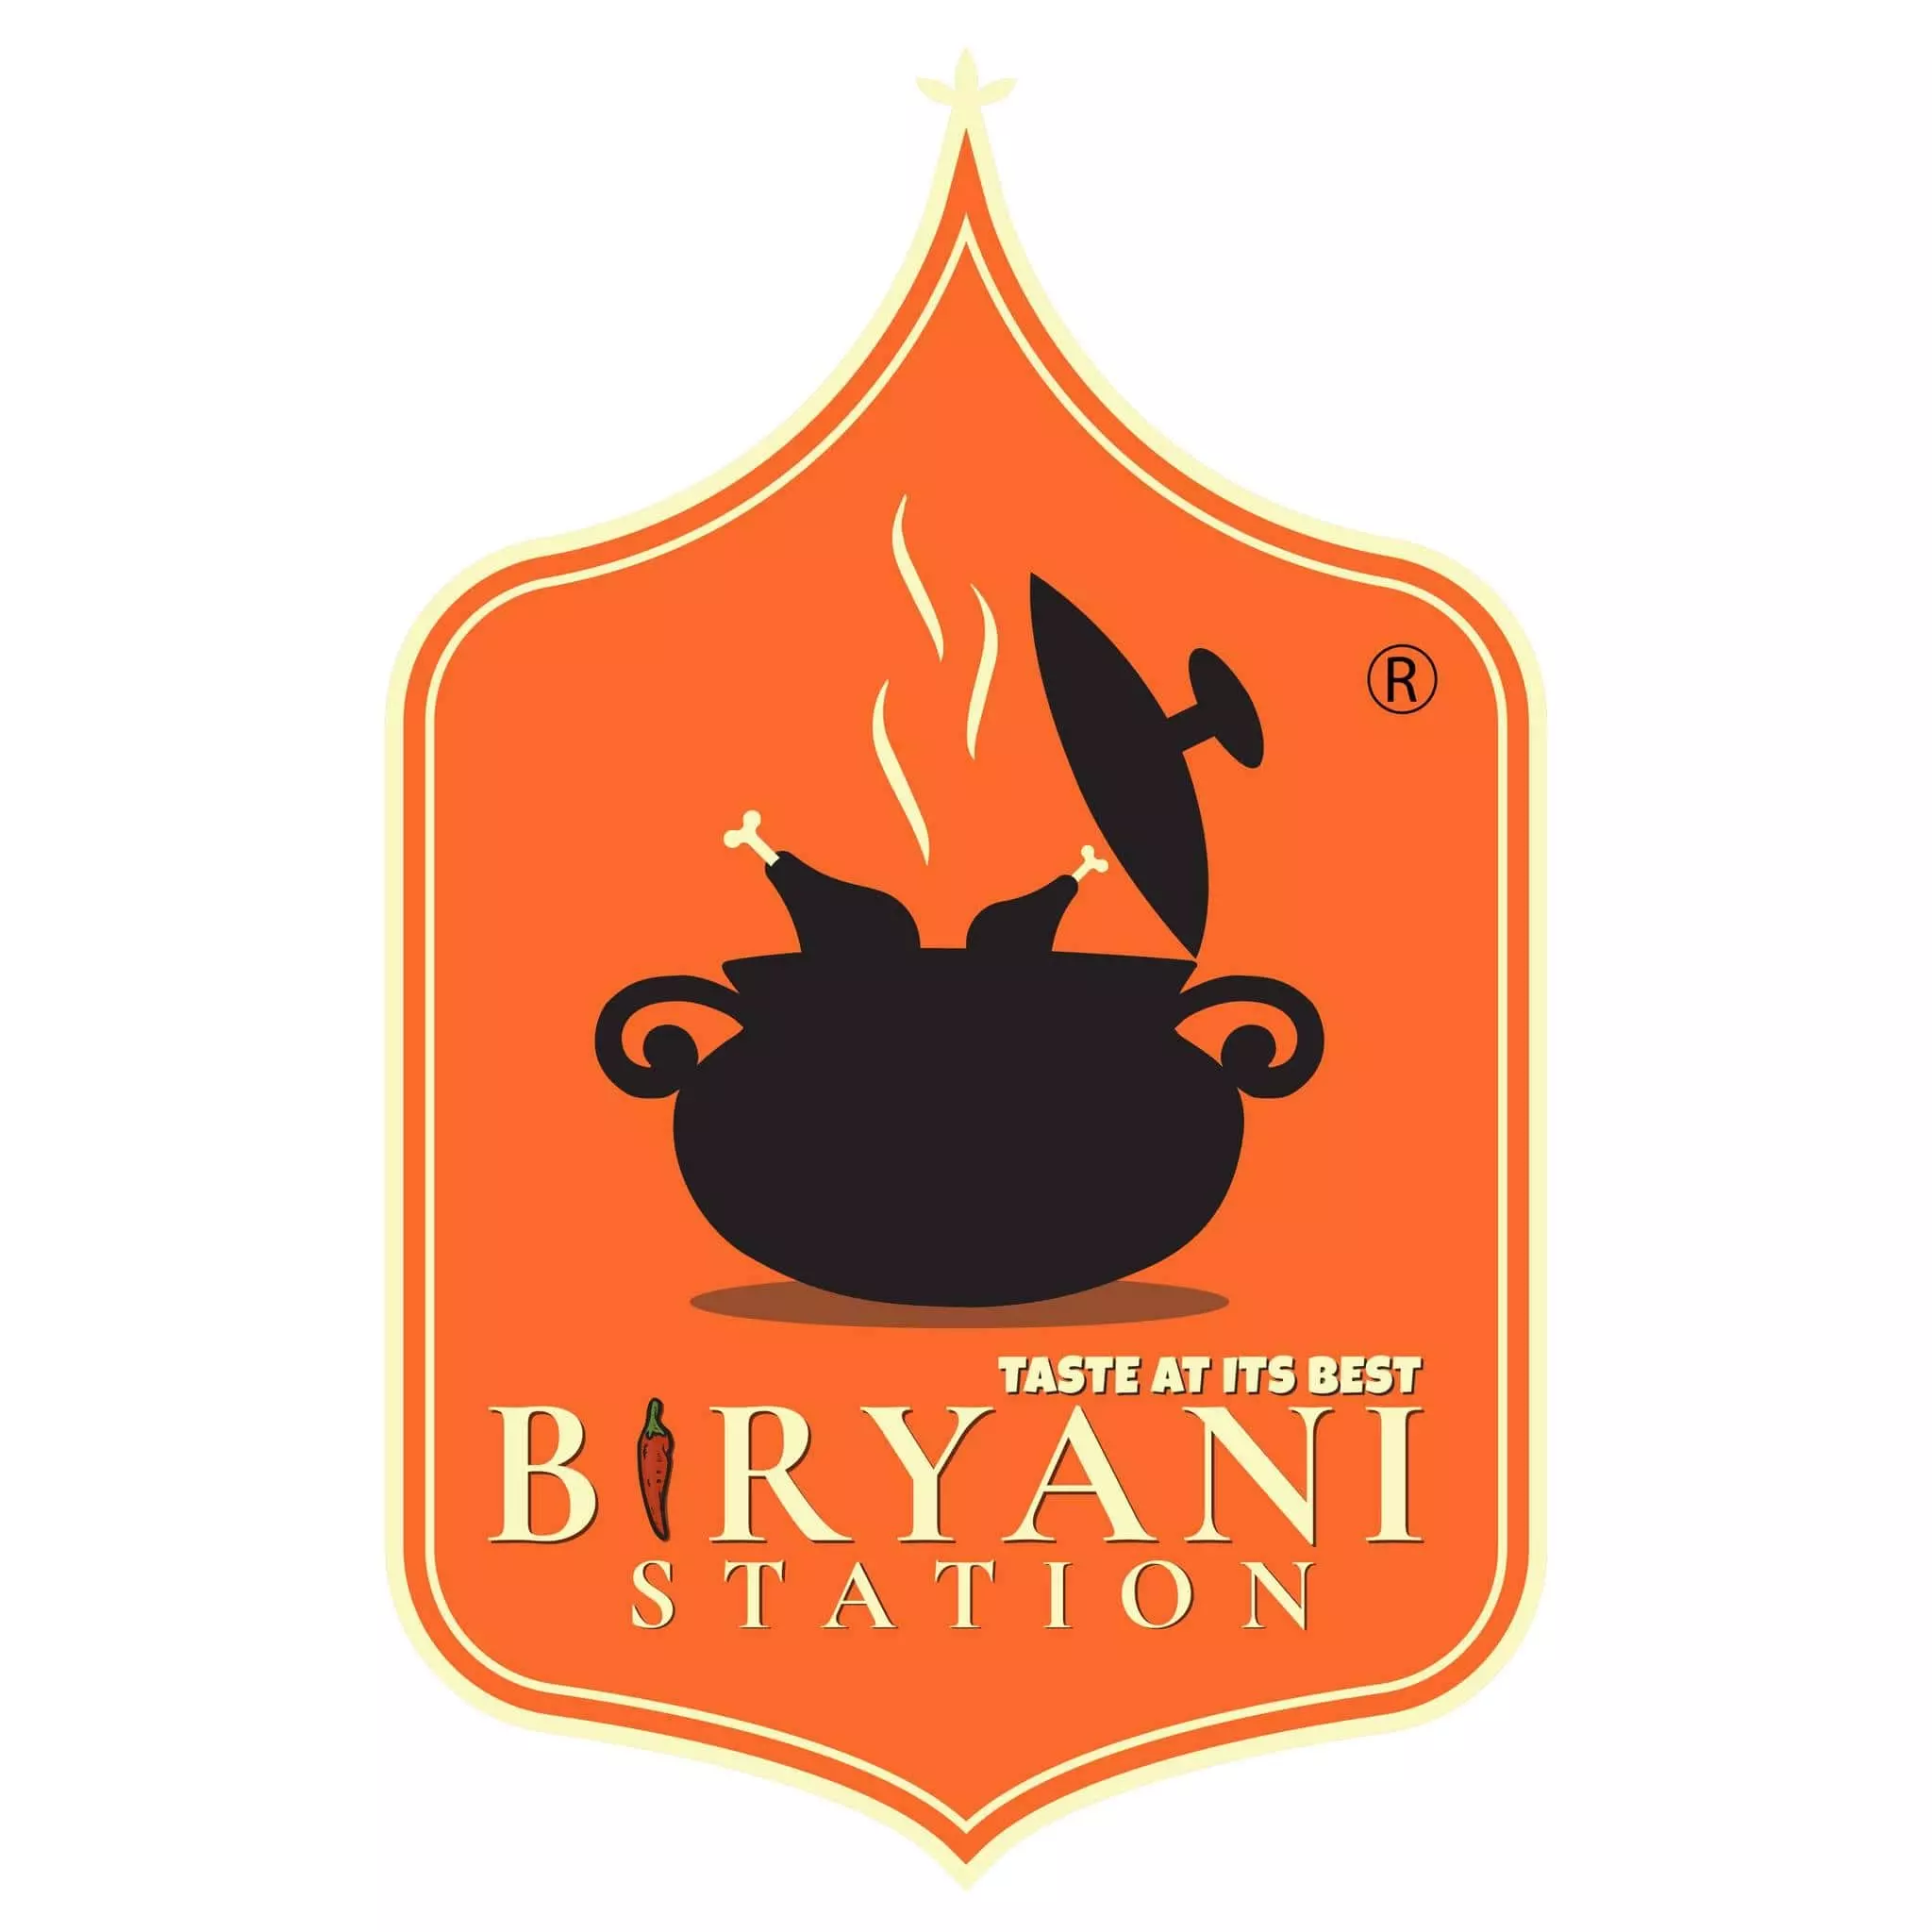 BIRYANI STATION